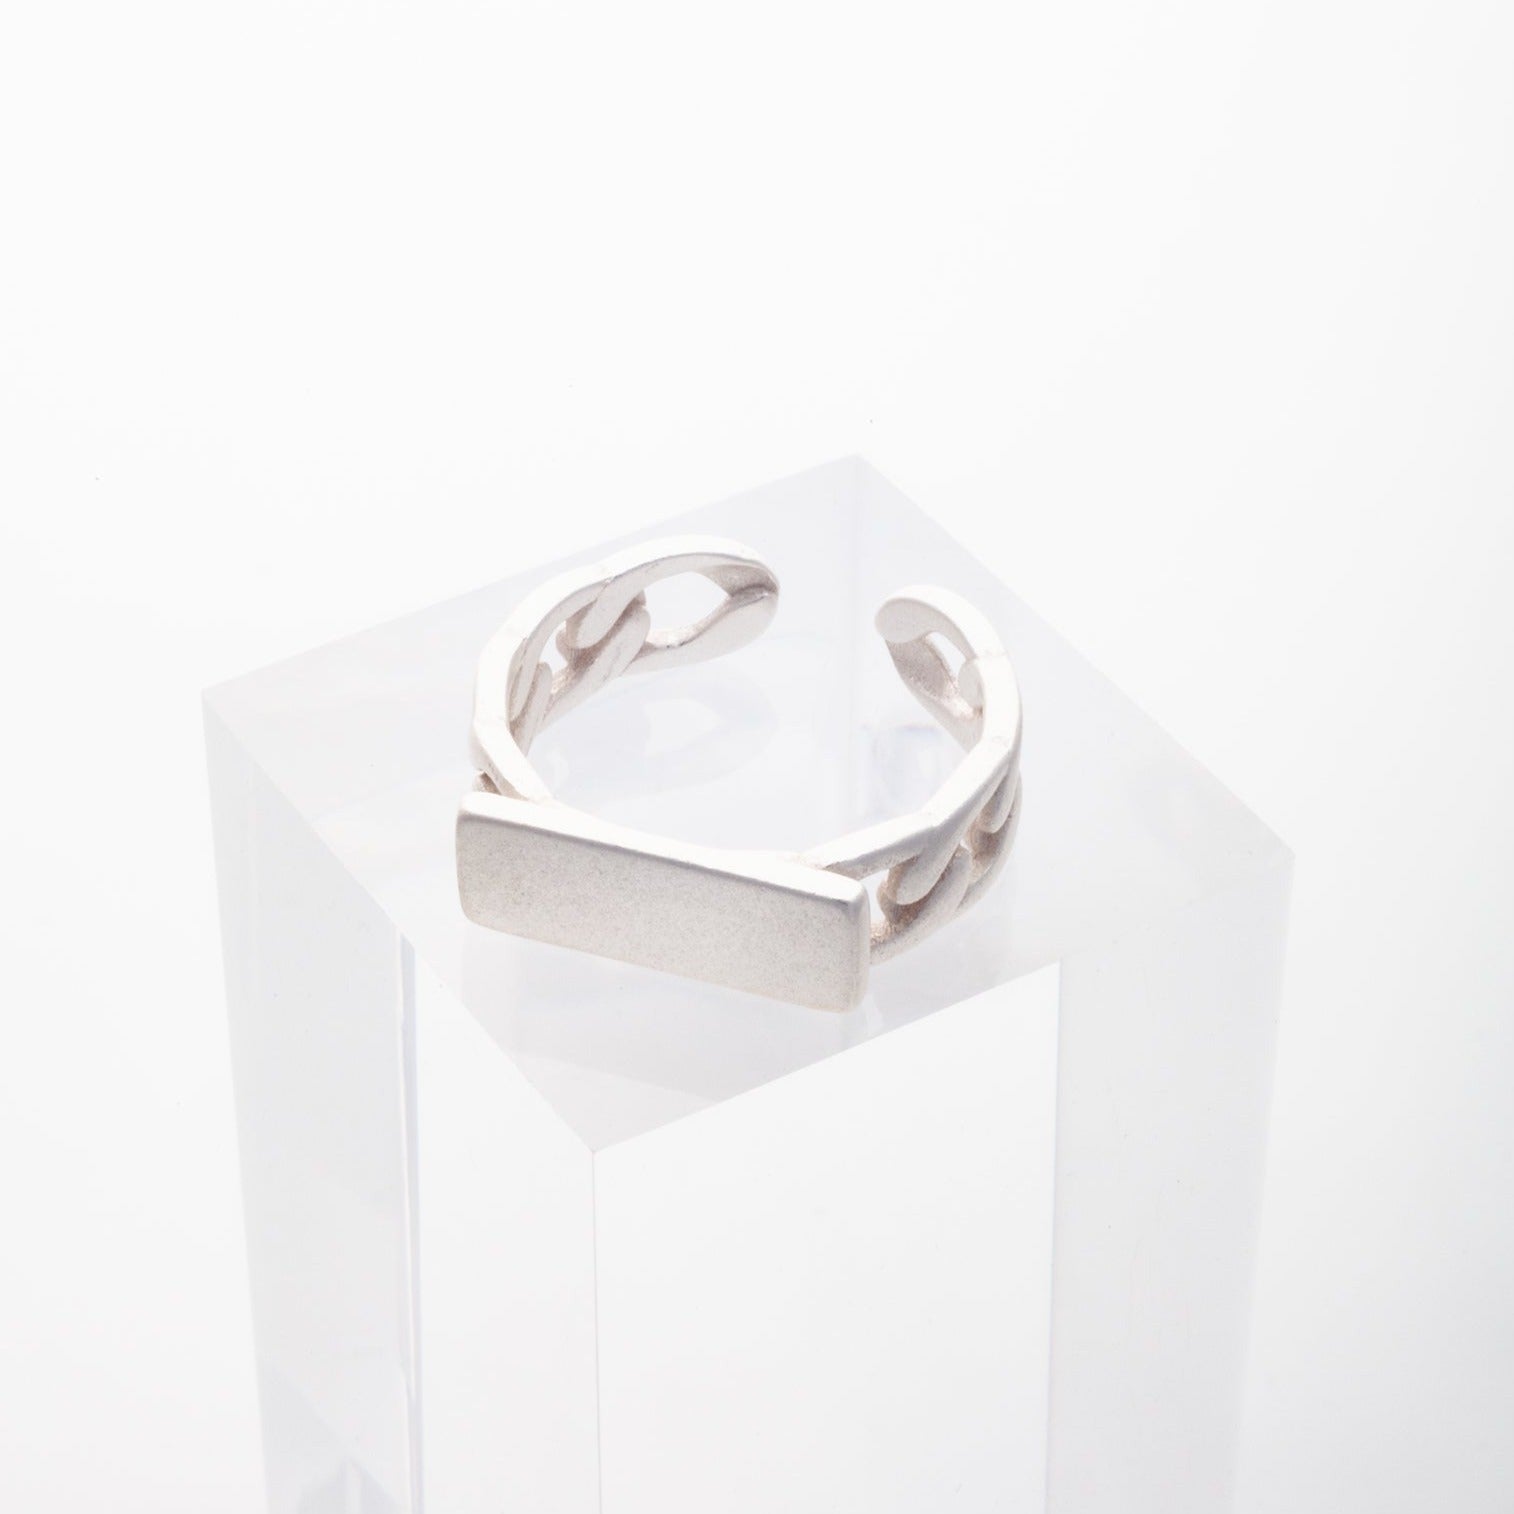 Chain Signet Ring in Matt Silver